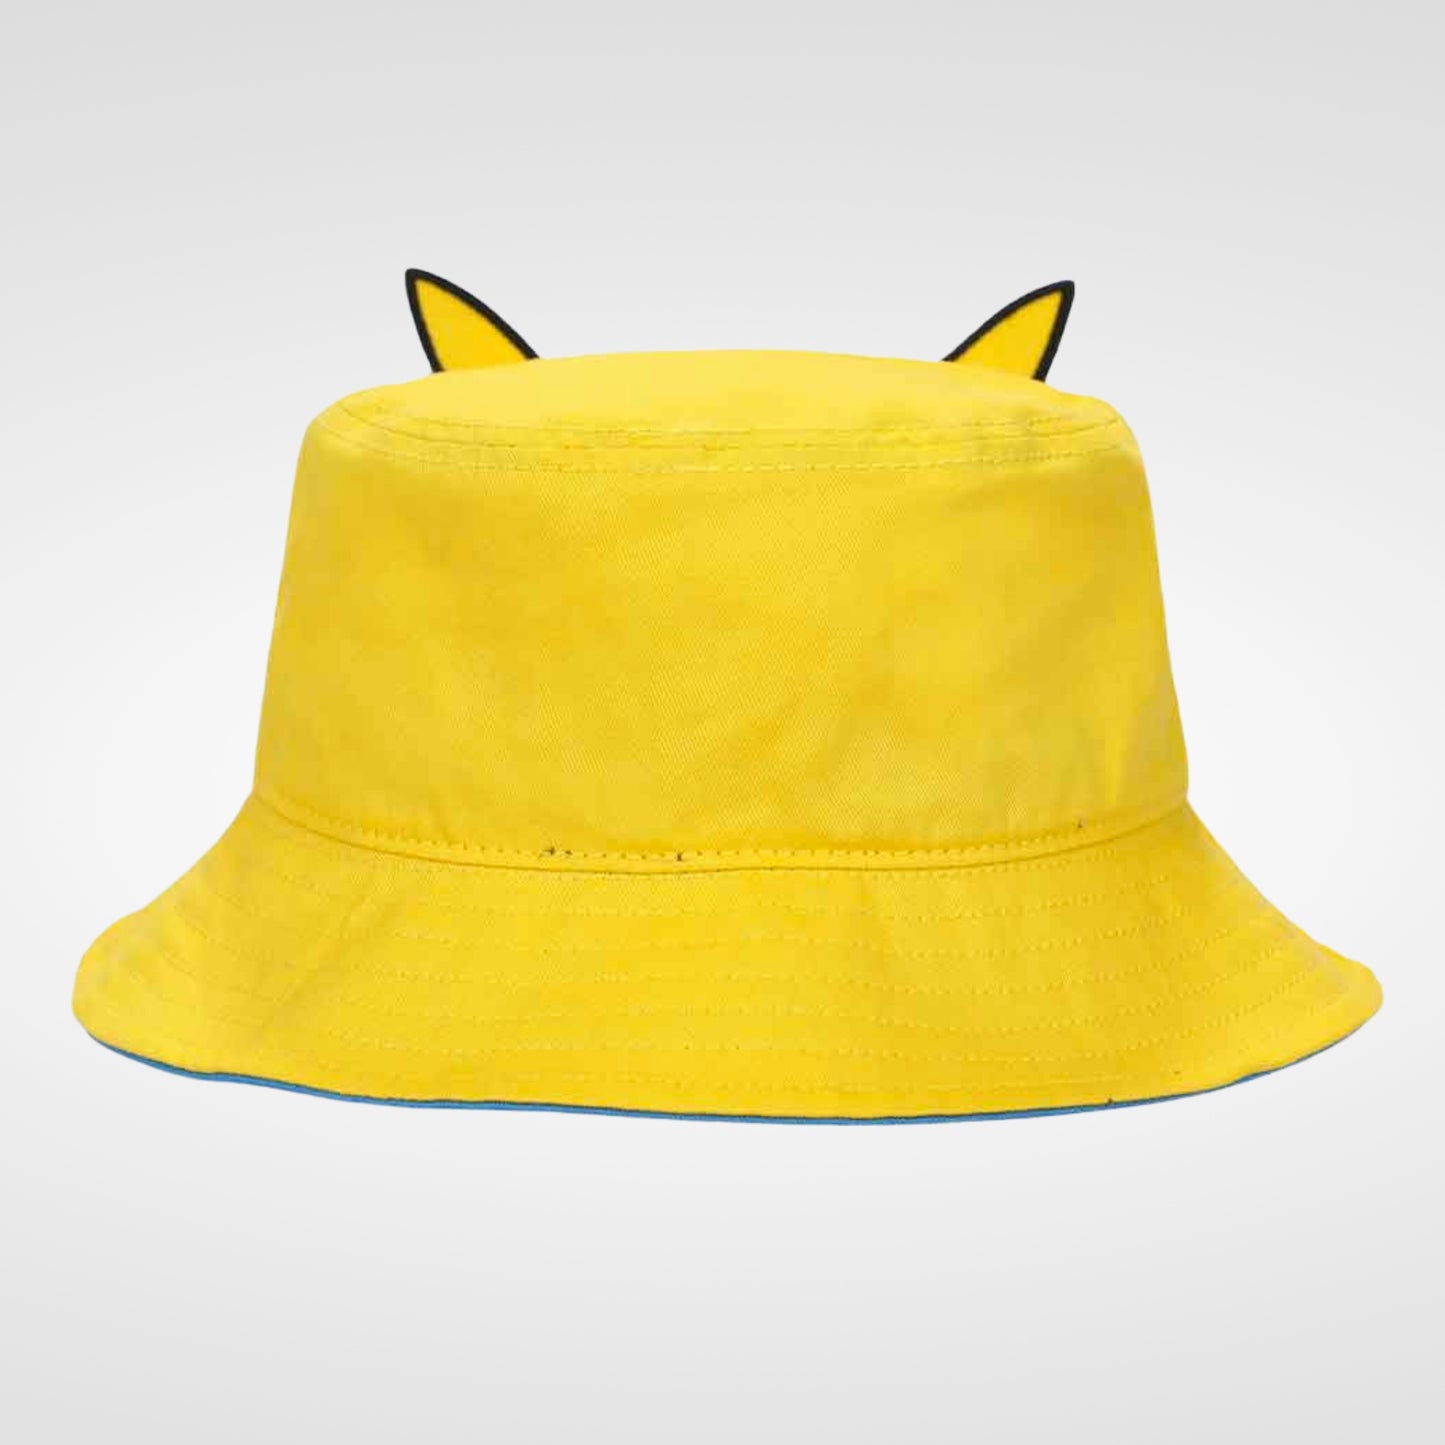 Pikachu Pokemon Cosplay Bucket Hat